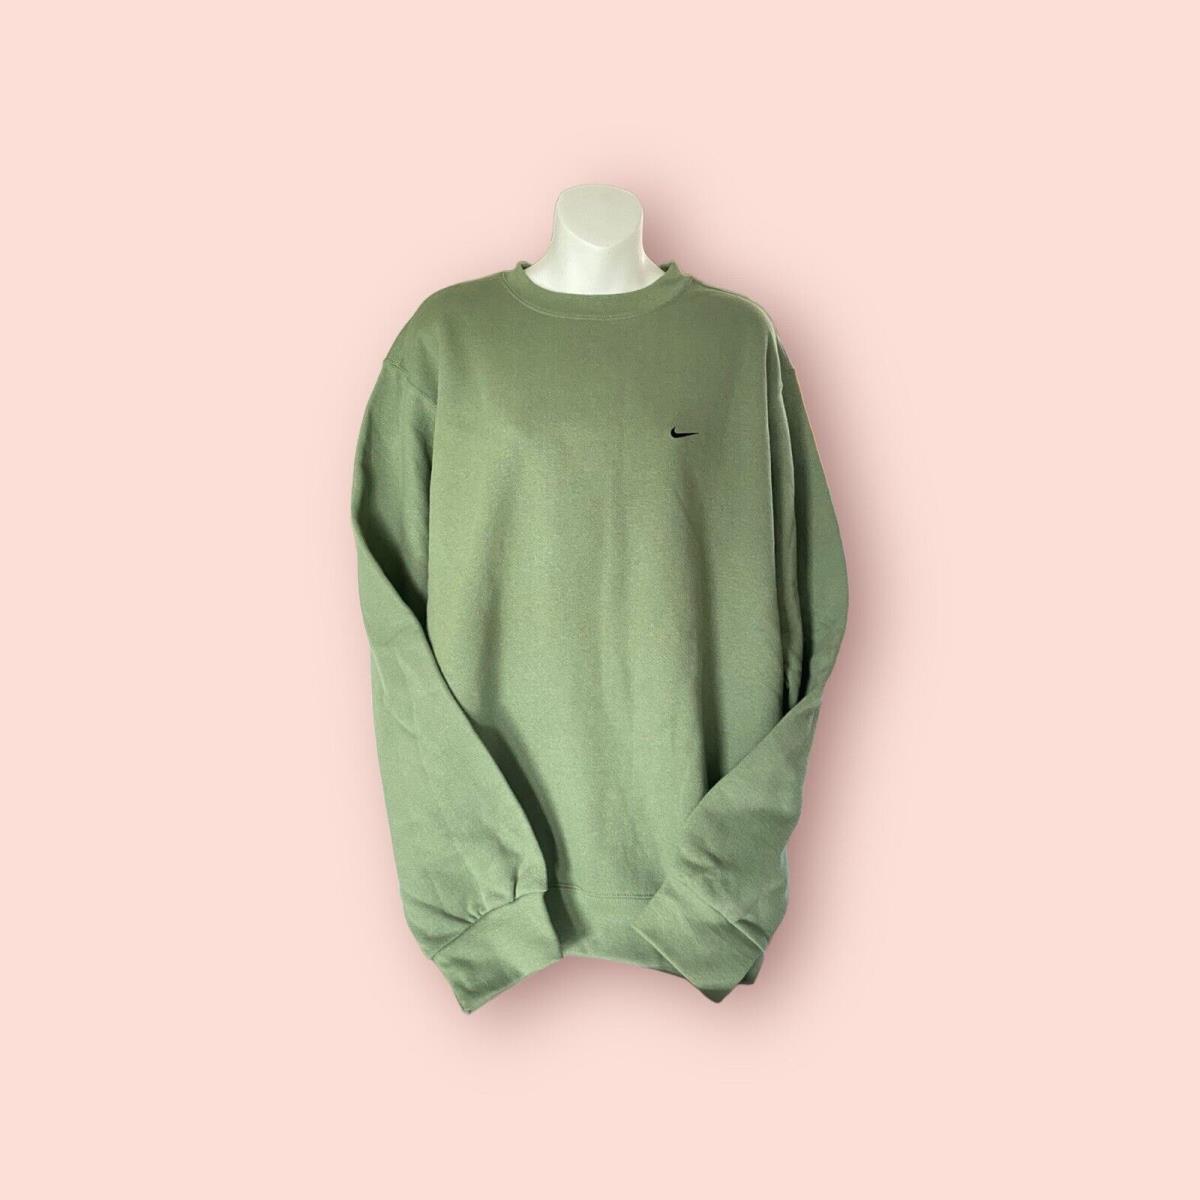 Nike Vintage Sweatshirt Green Swoosh Basic Check 90s Sweater Made In Usa - M